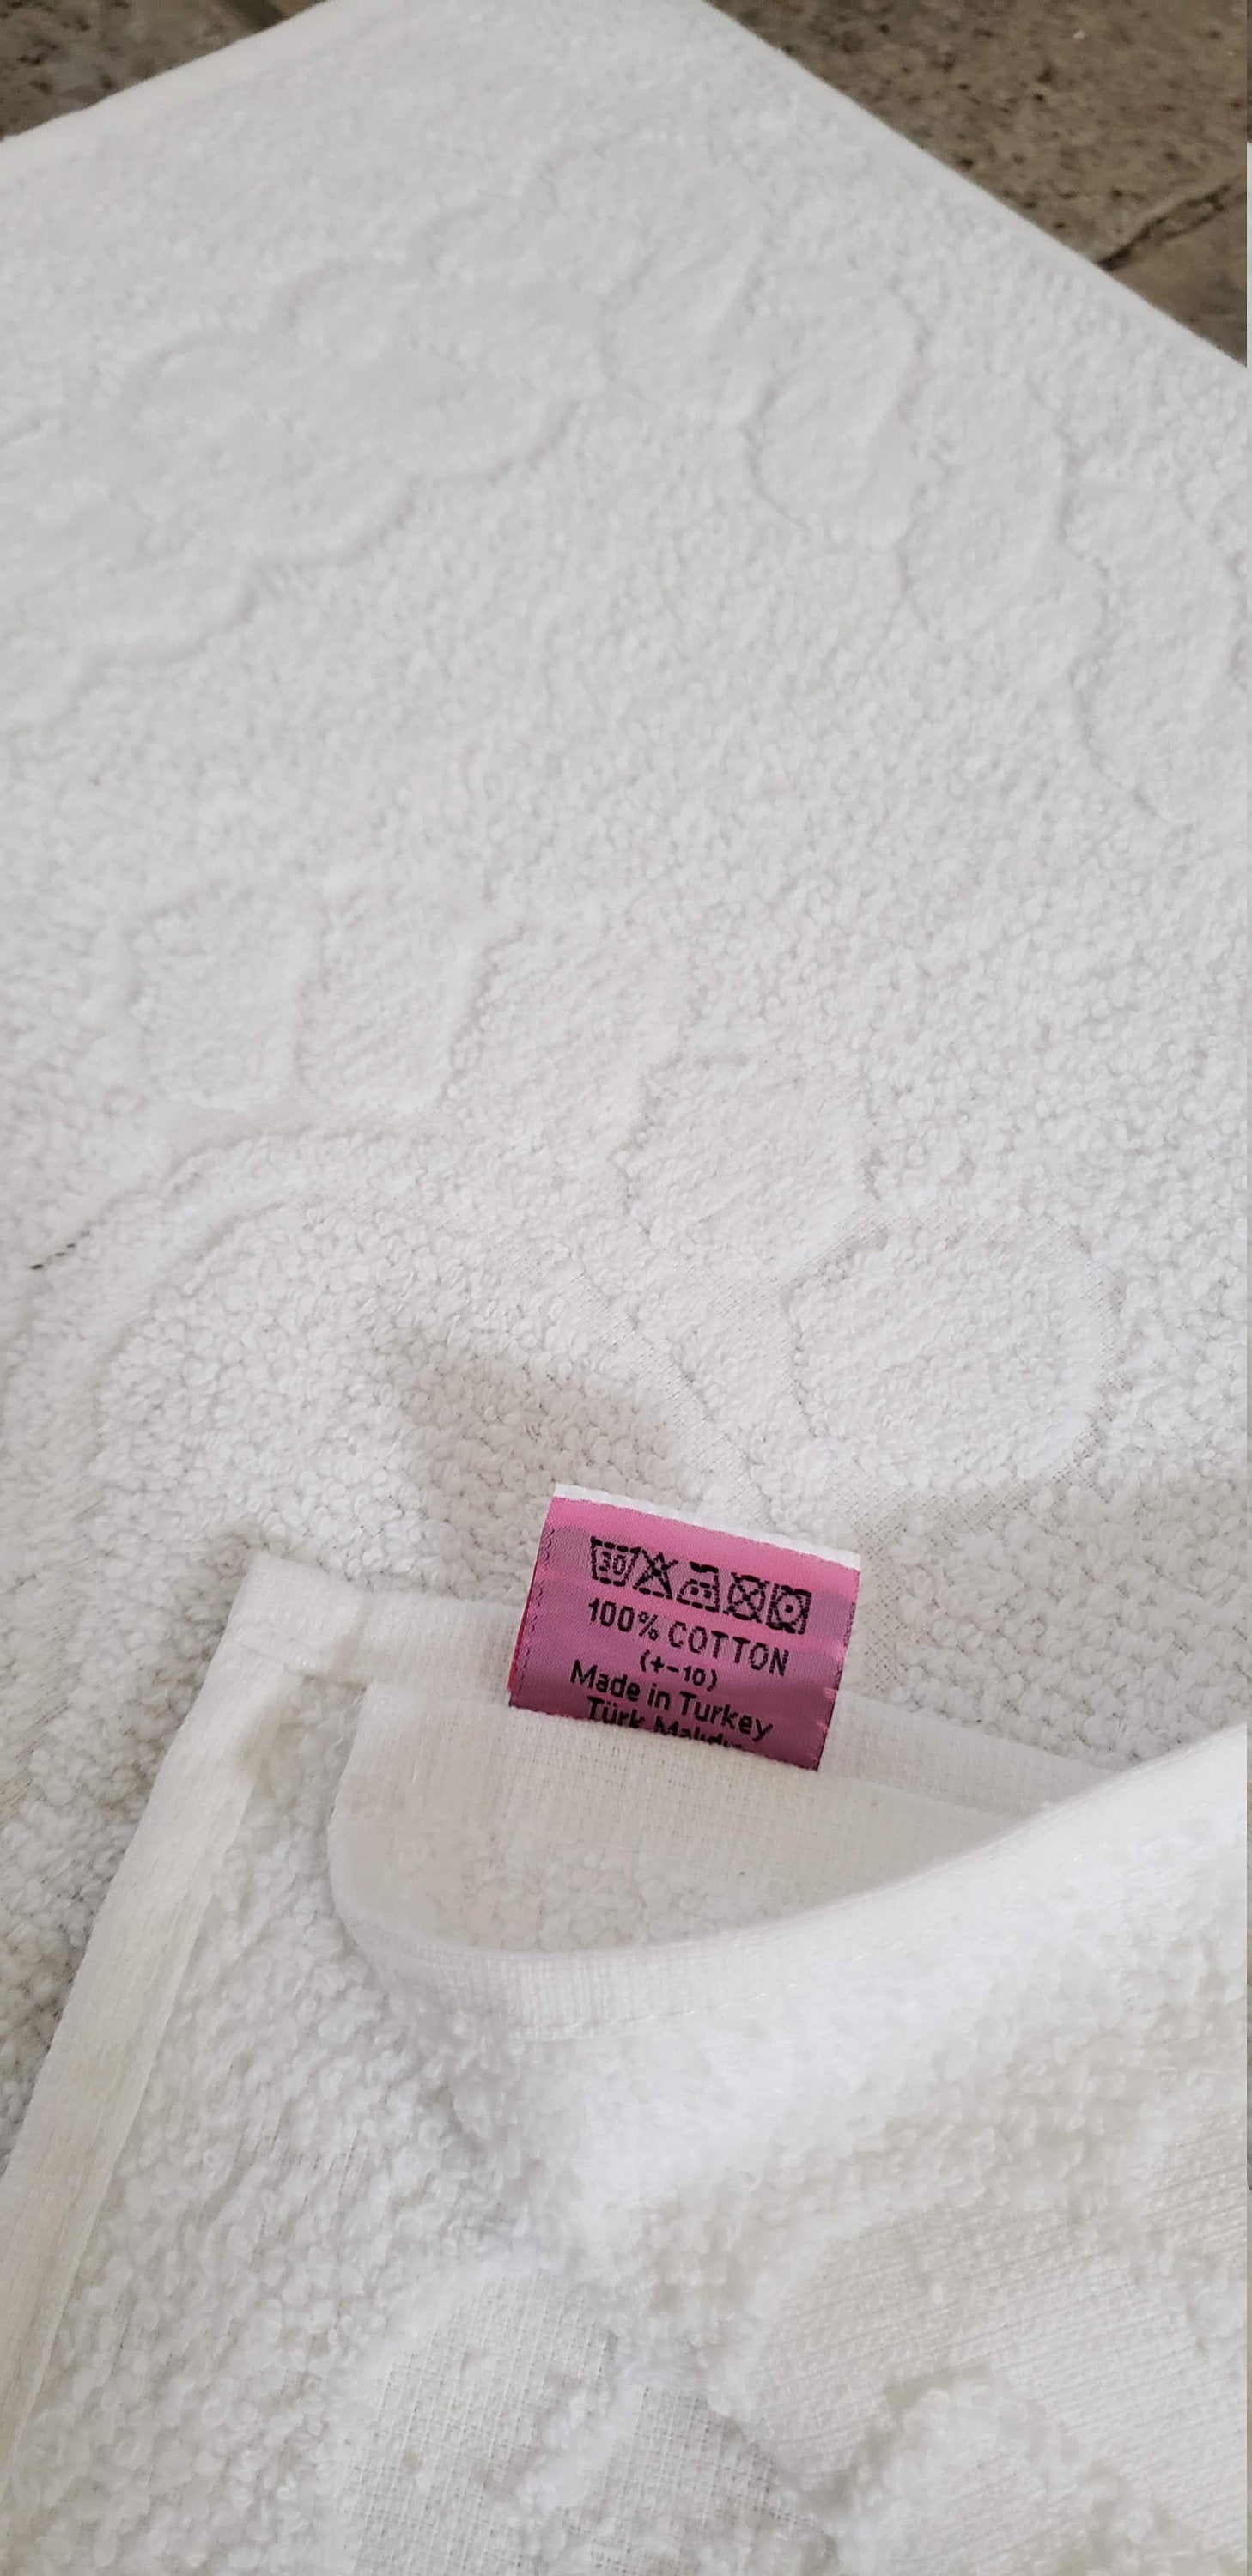 Wholesale White Tea Towels in Bulk (19x 27)